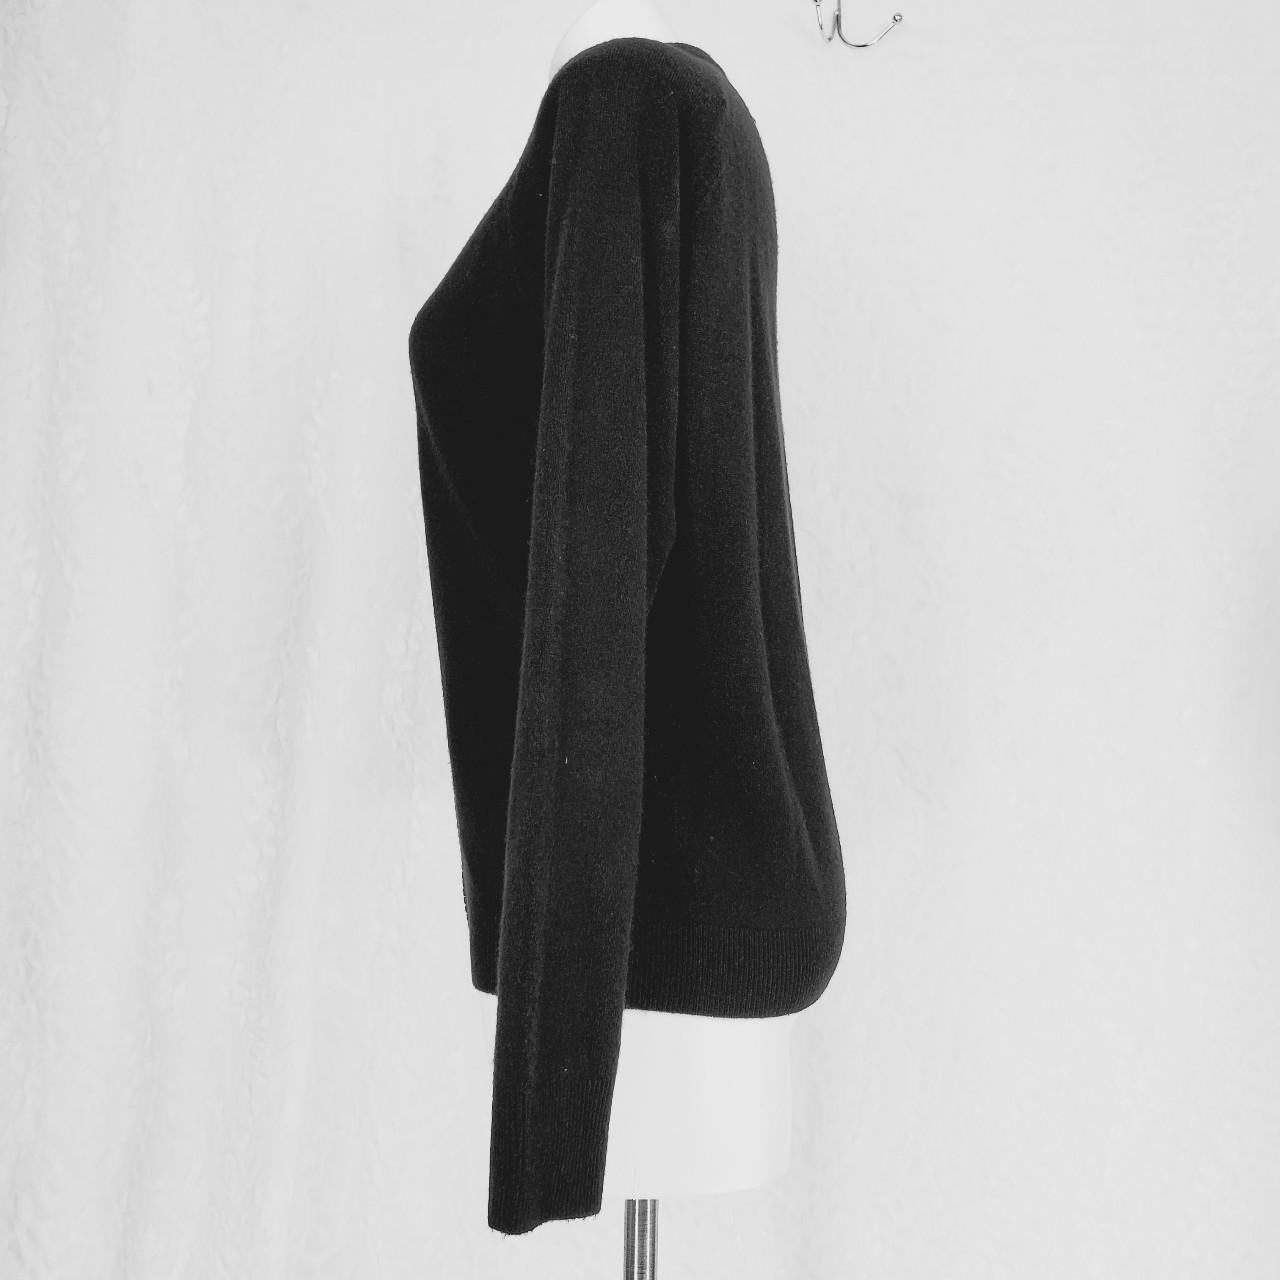 Product Image 2 - Karen Scott soft black sweater